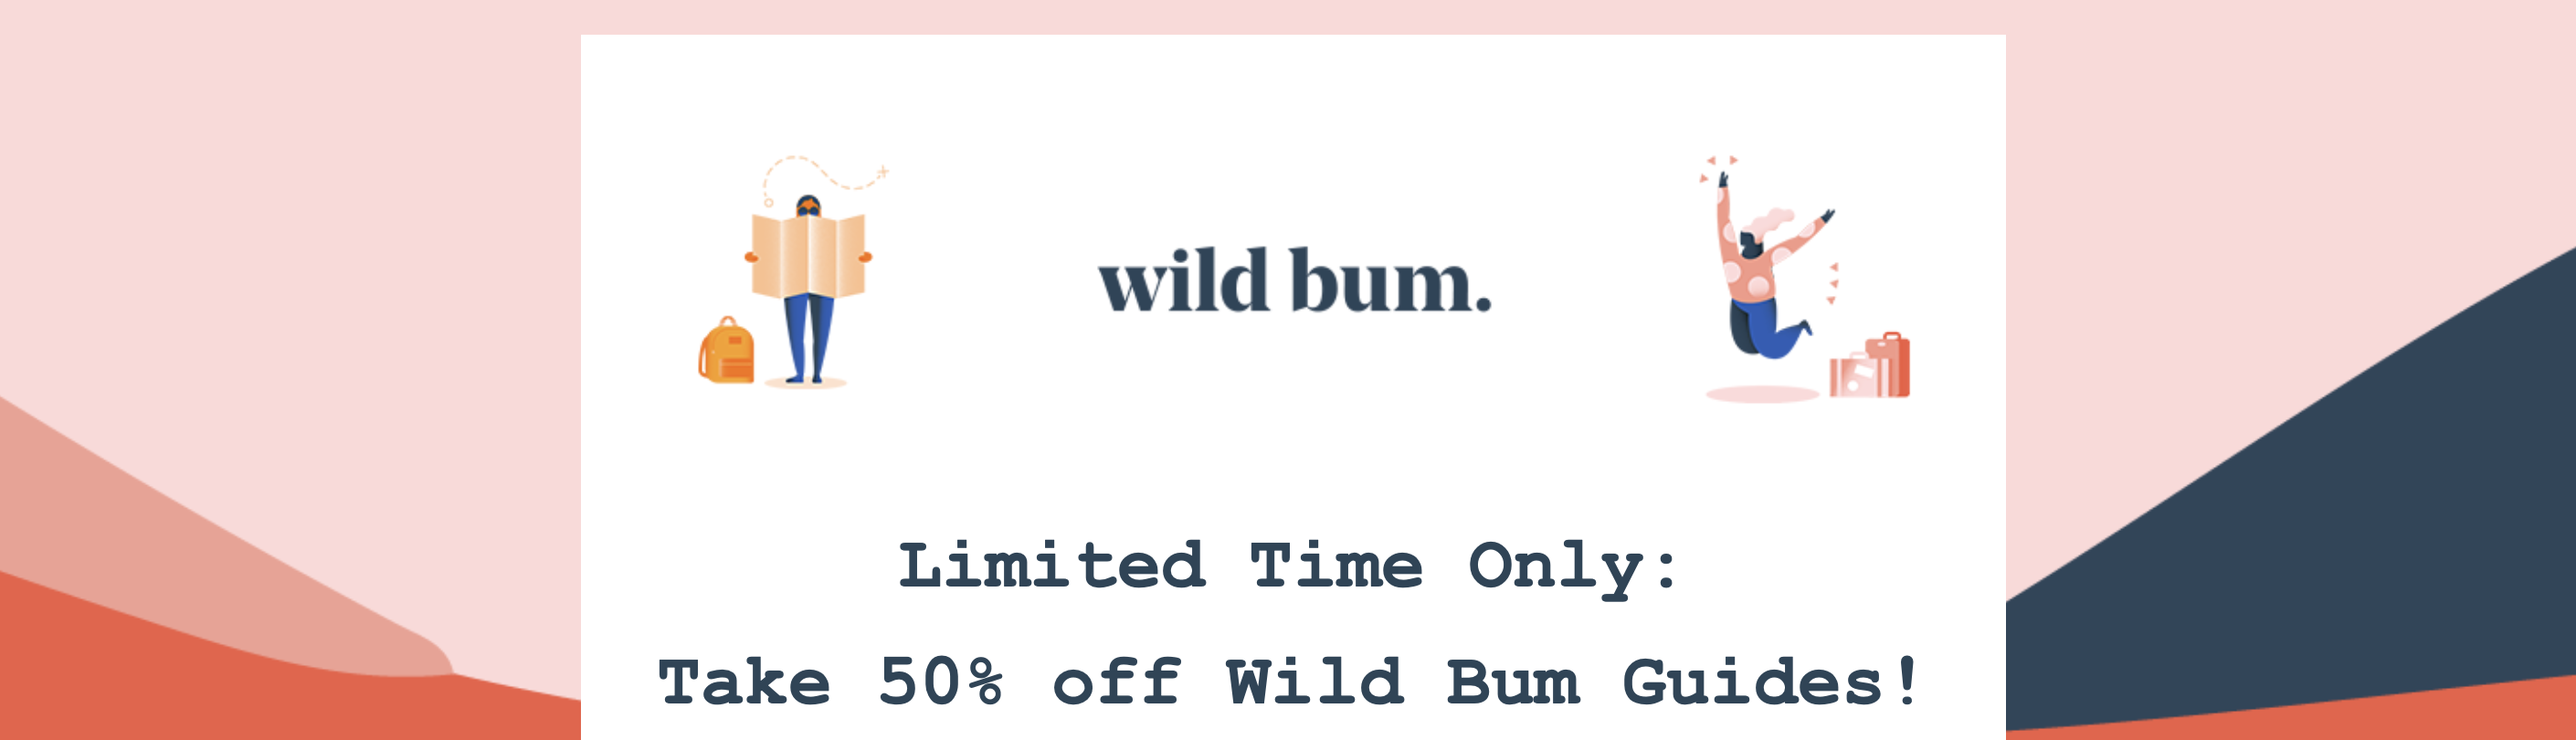 Wild Bum Special Deal